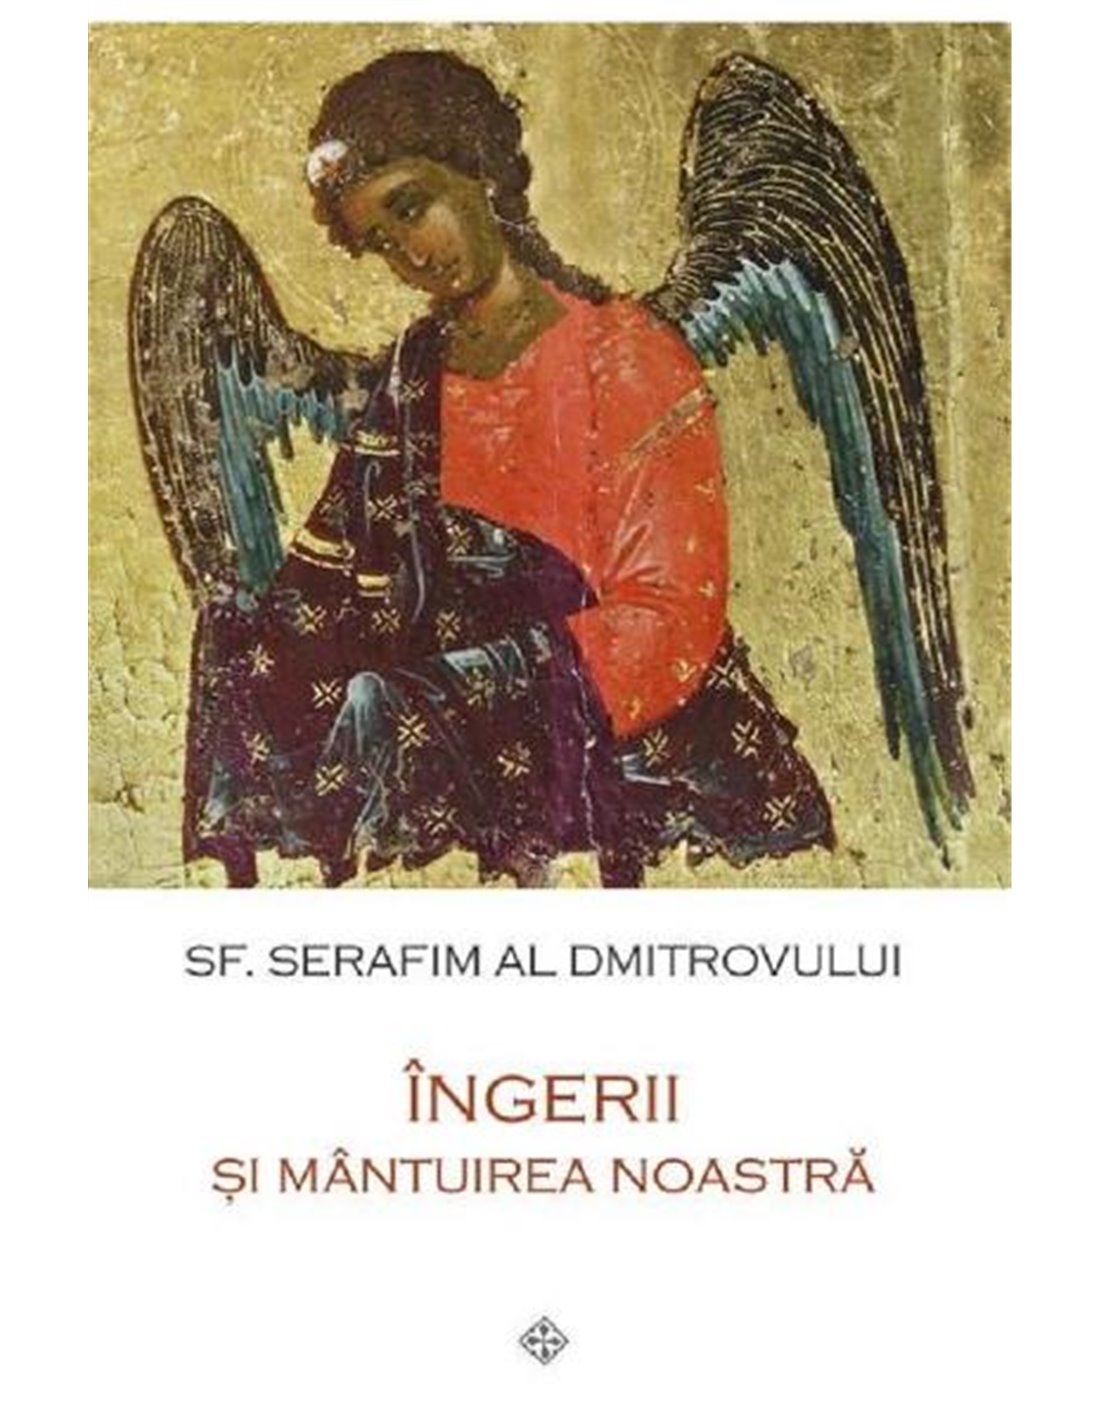 Ingerii si mantuirea noastra - Sf. Serafim al Dmitrovului | Editura Sophia